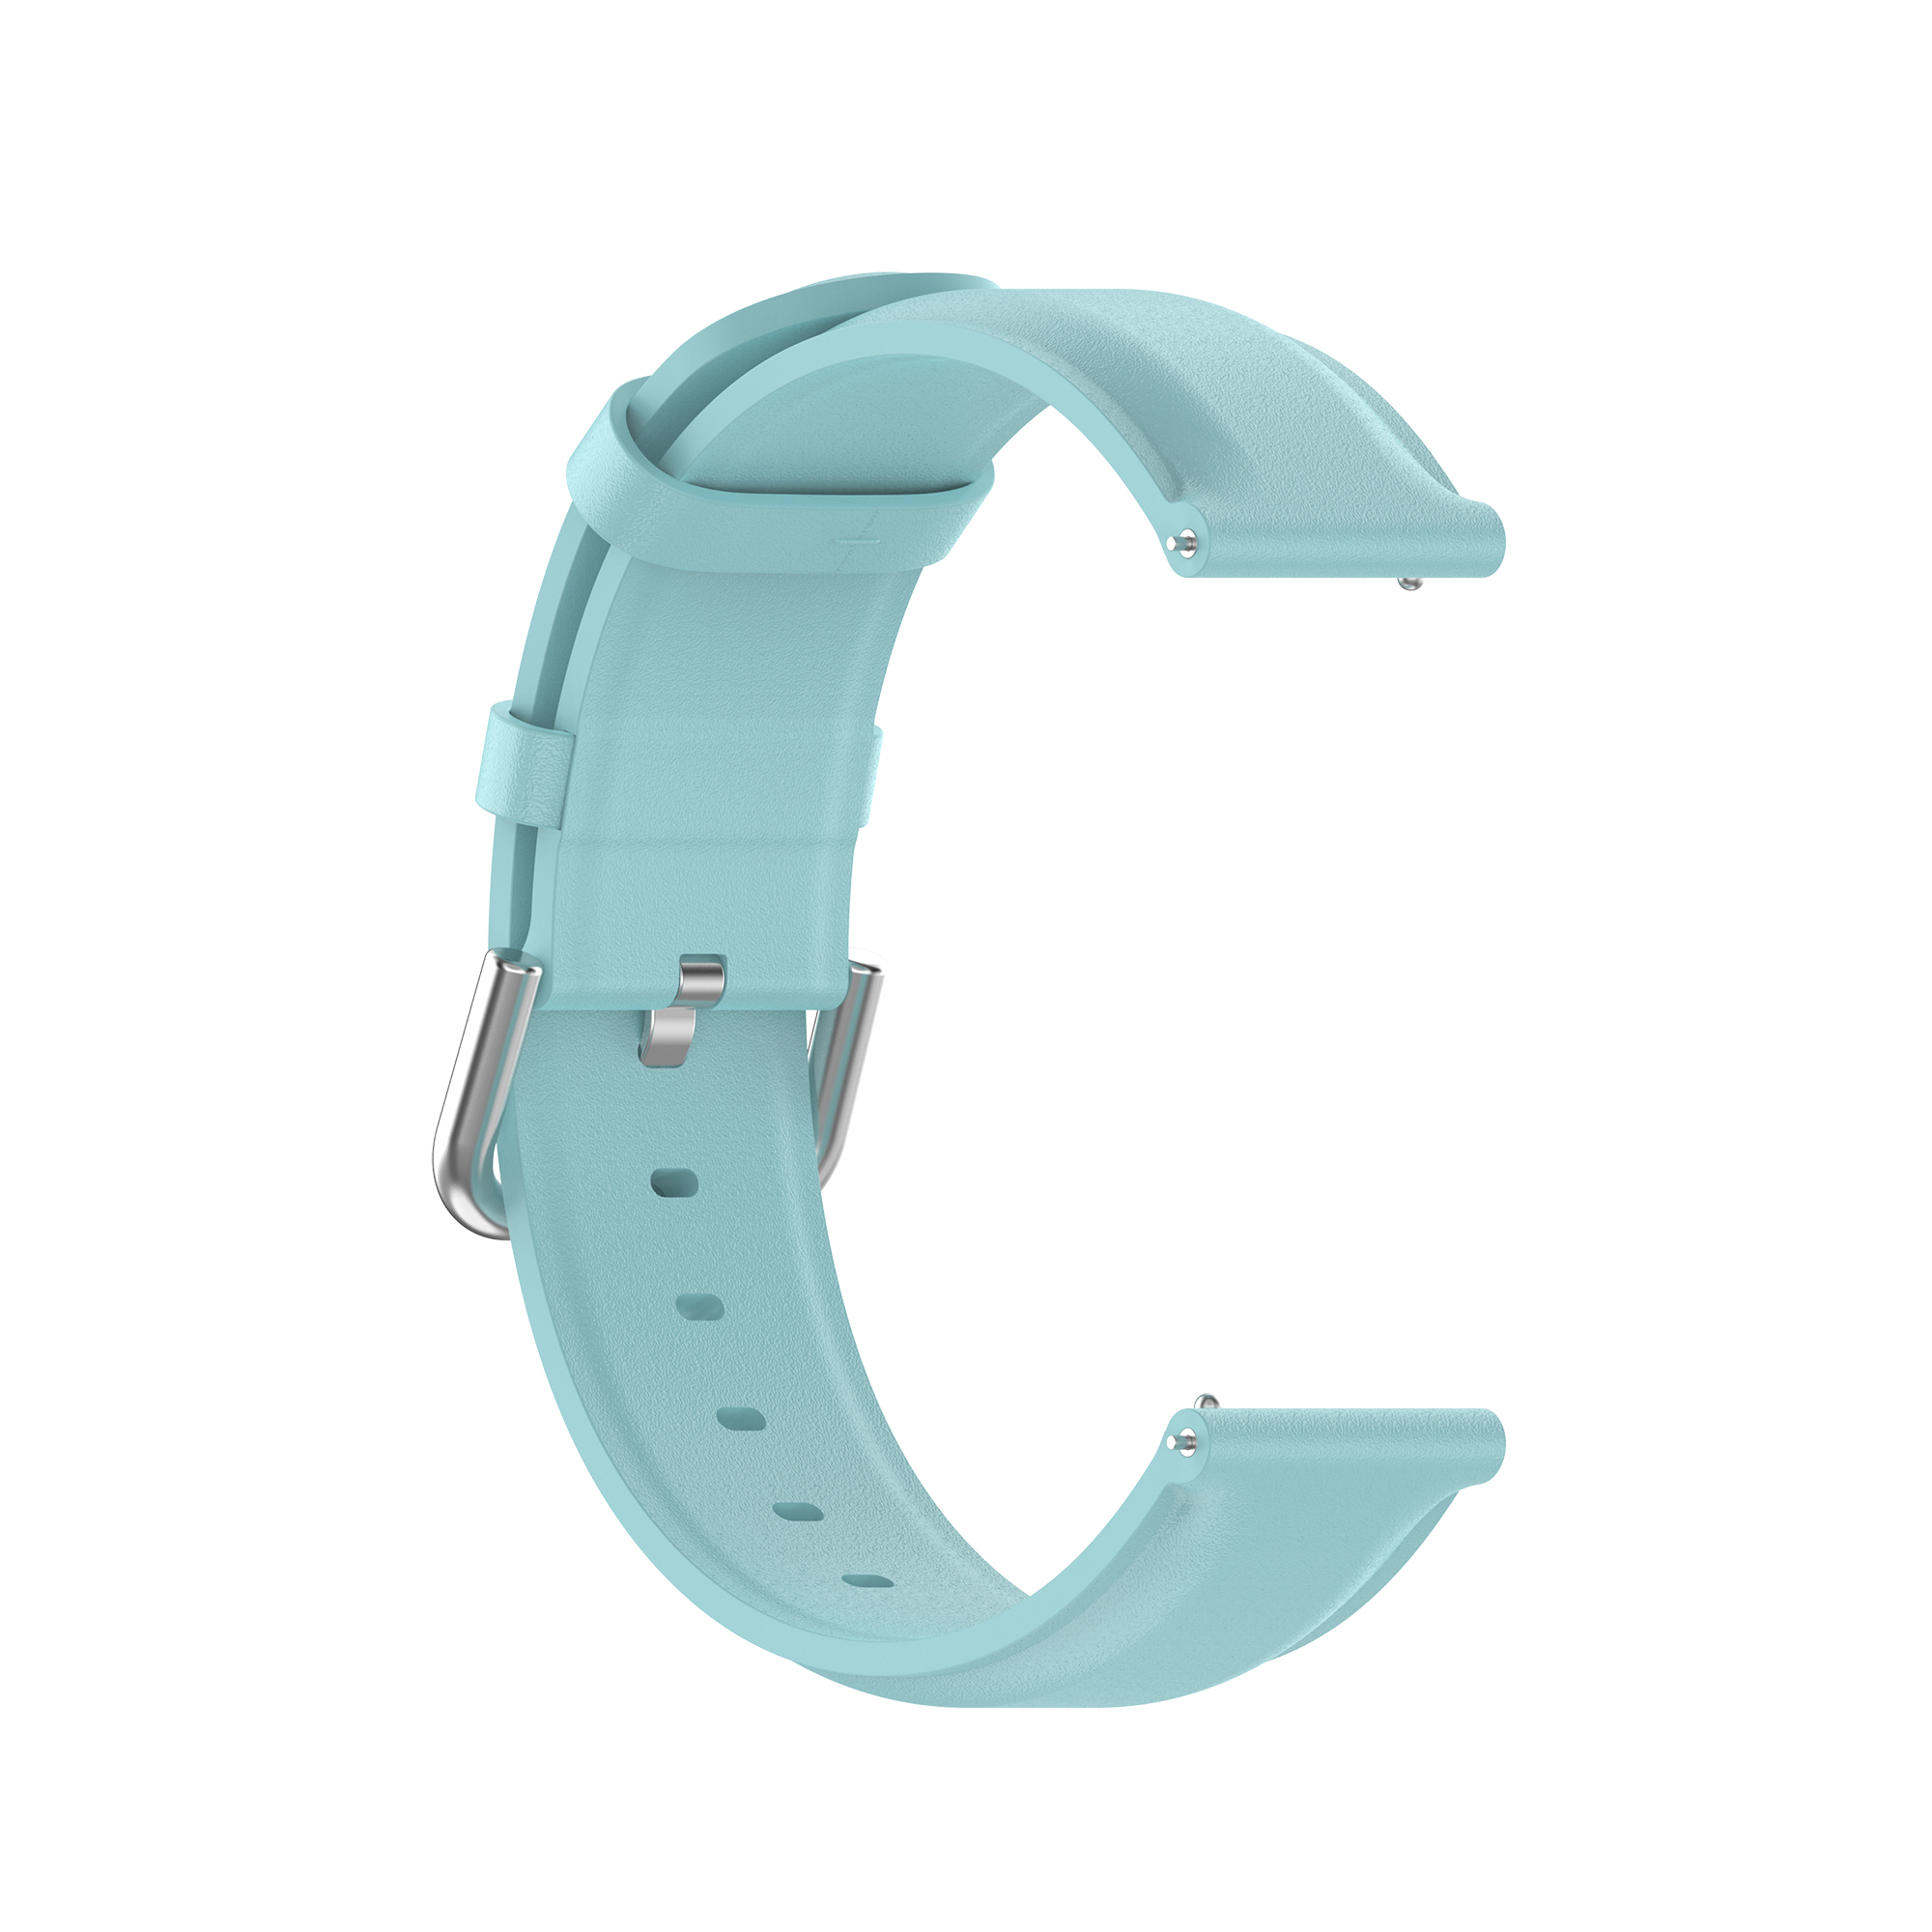 22mm-Universal-Watch-Band-Round-Tail-Leather-Watch-Strap-for-Huawei-Watch-GT2-Pro-Zeblaze-GTS-BW-HL3-1765660-30